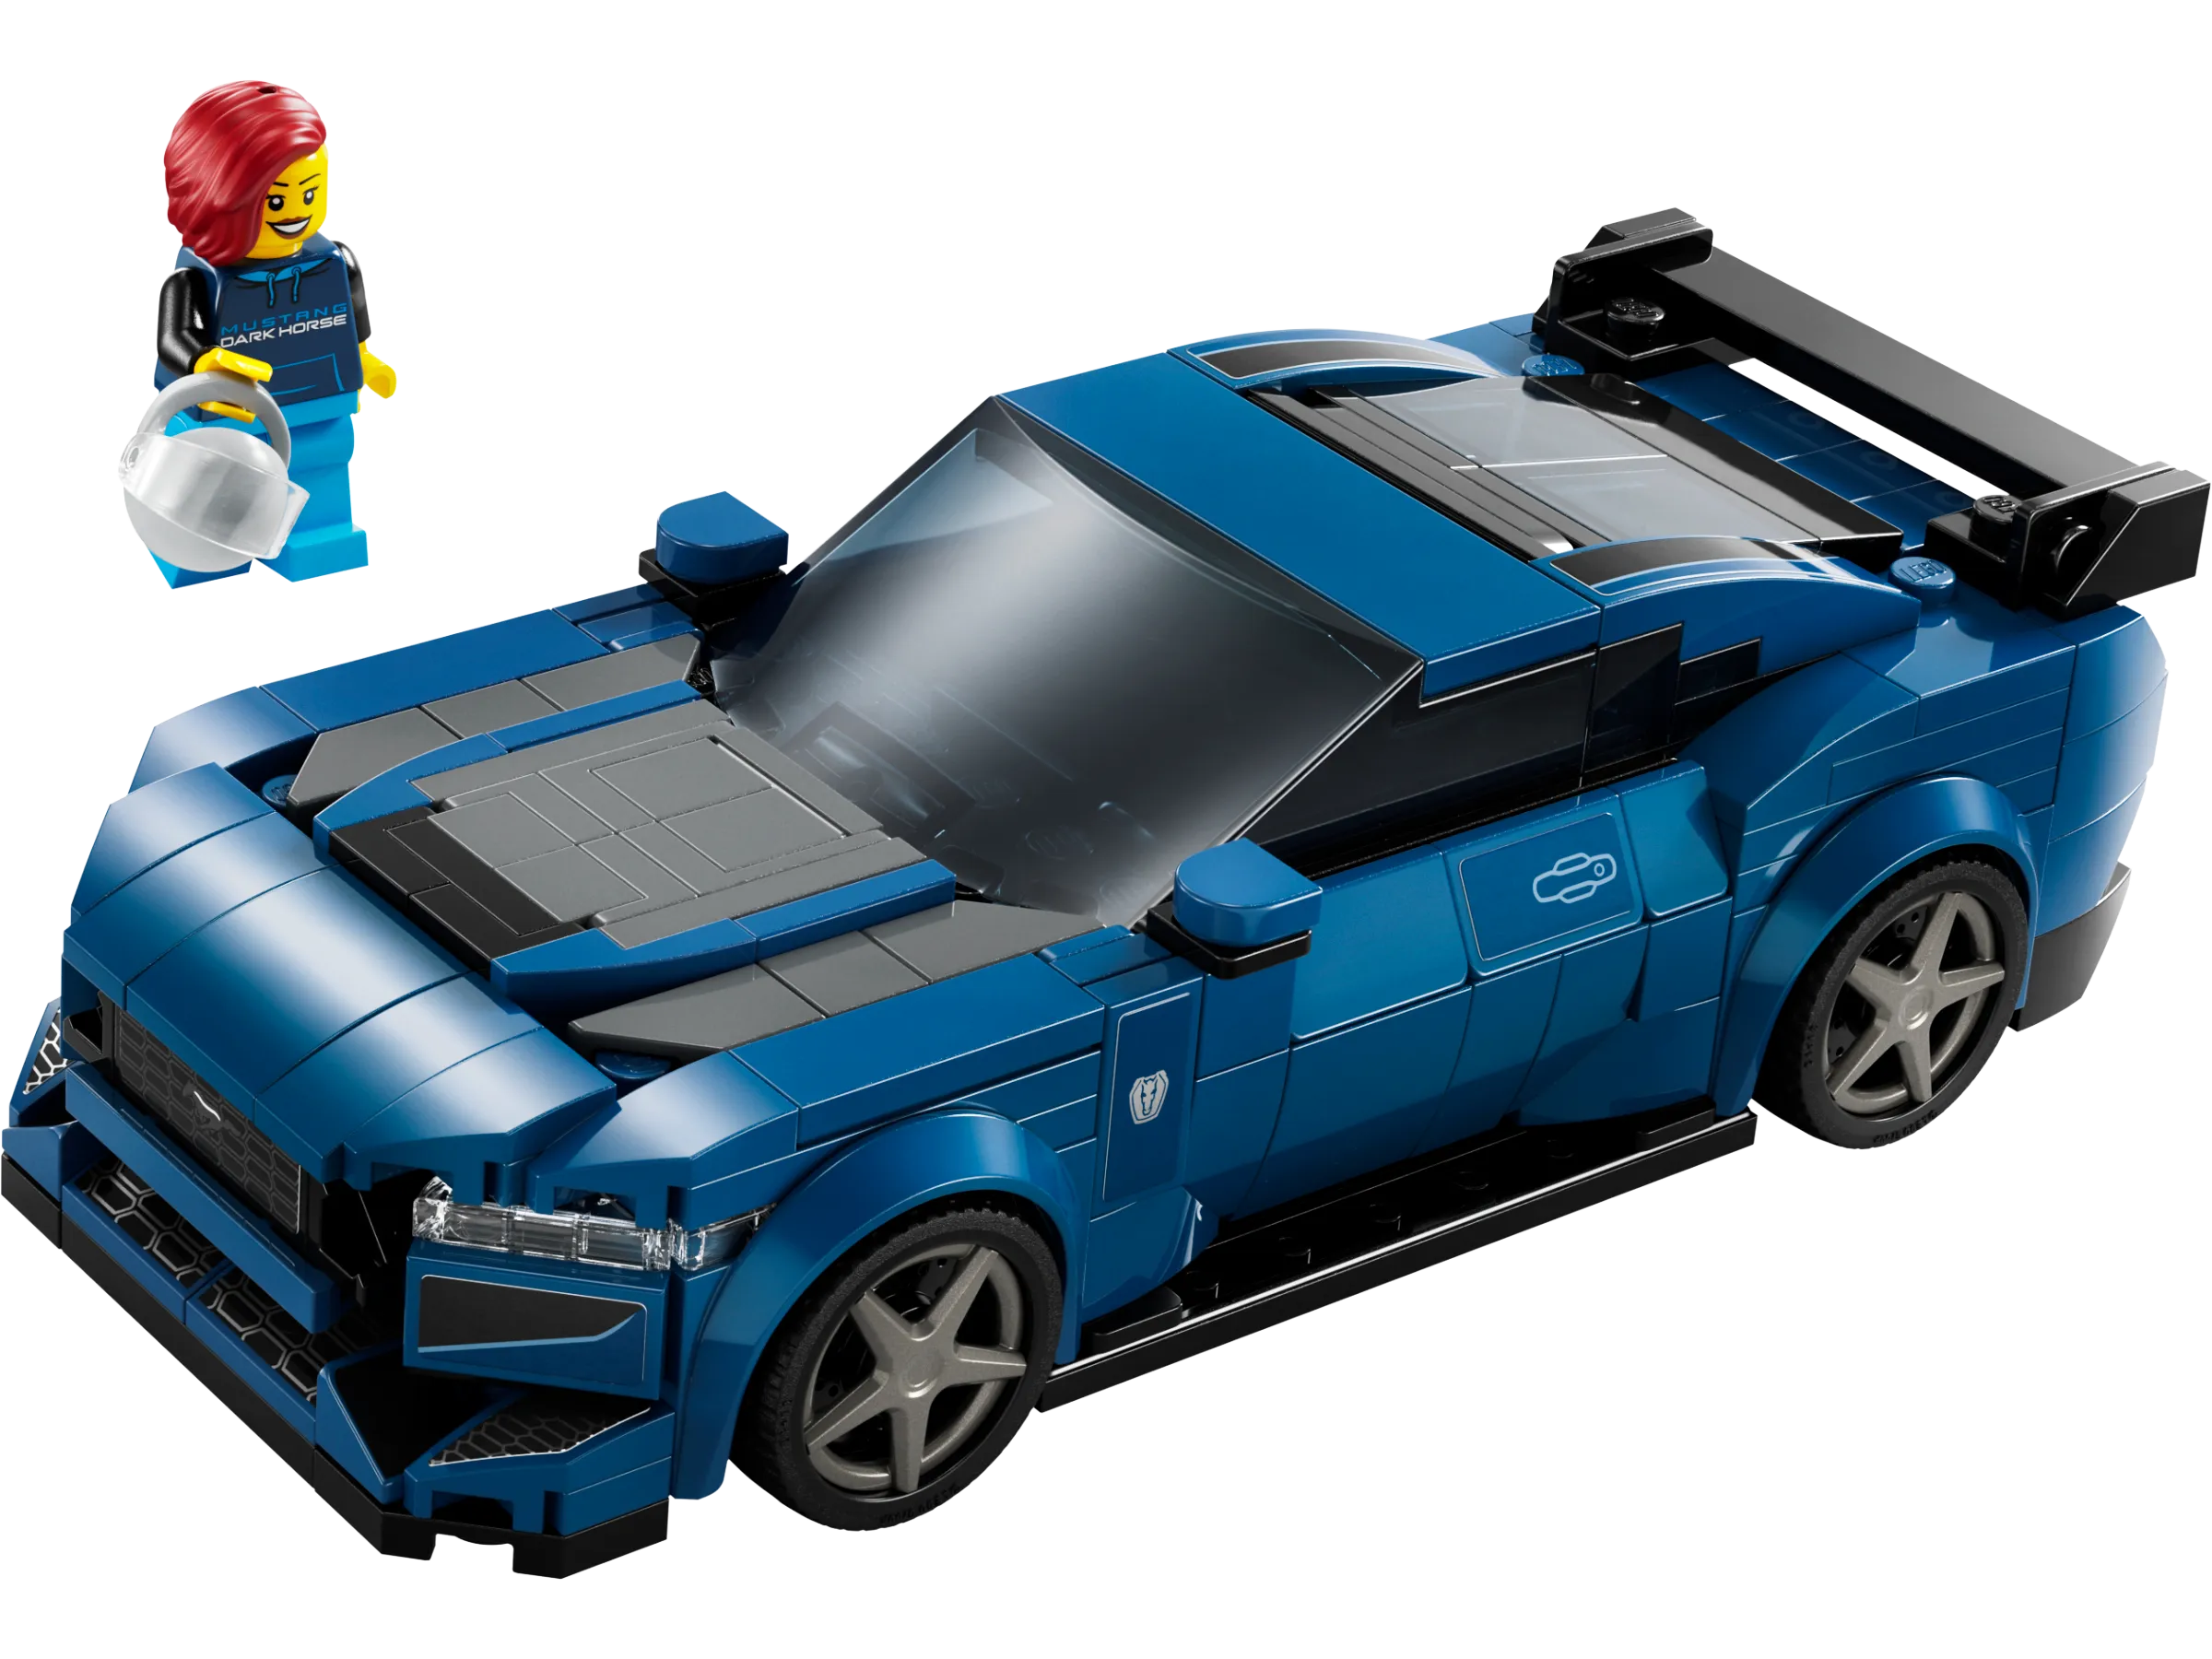 LEGO Speed Champions Ford Mustang Dark Horse Sportwagen